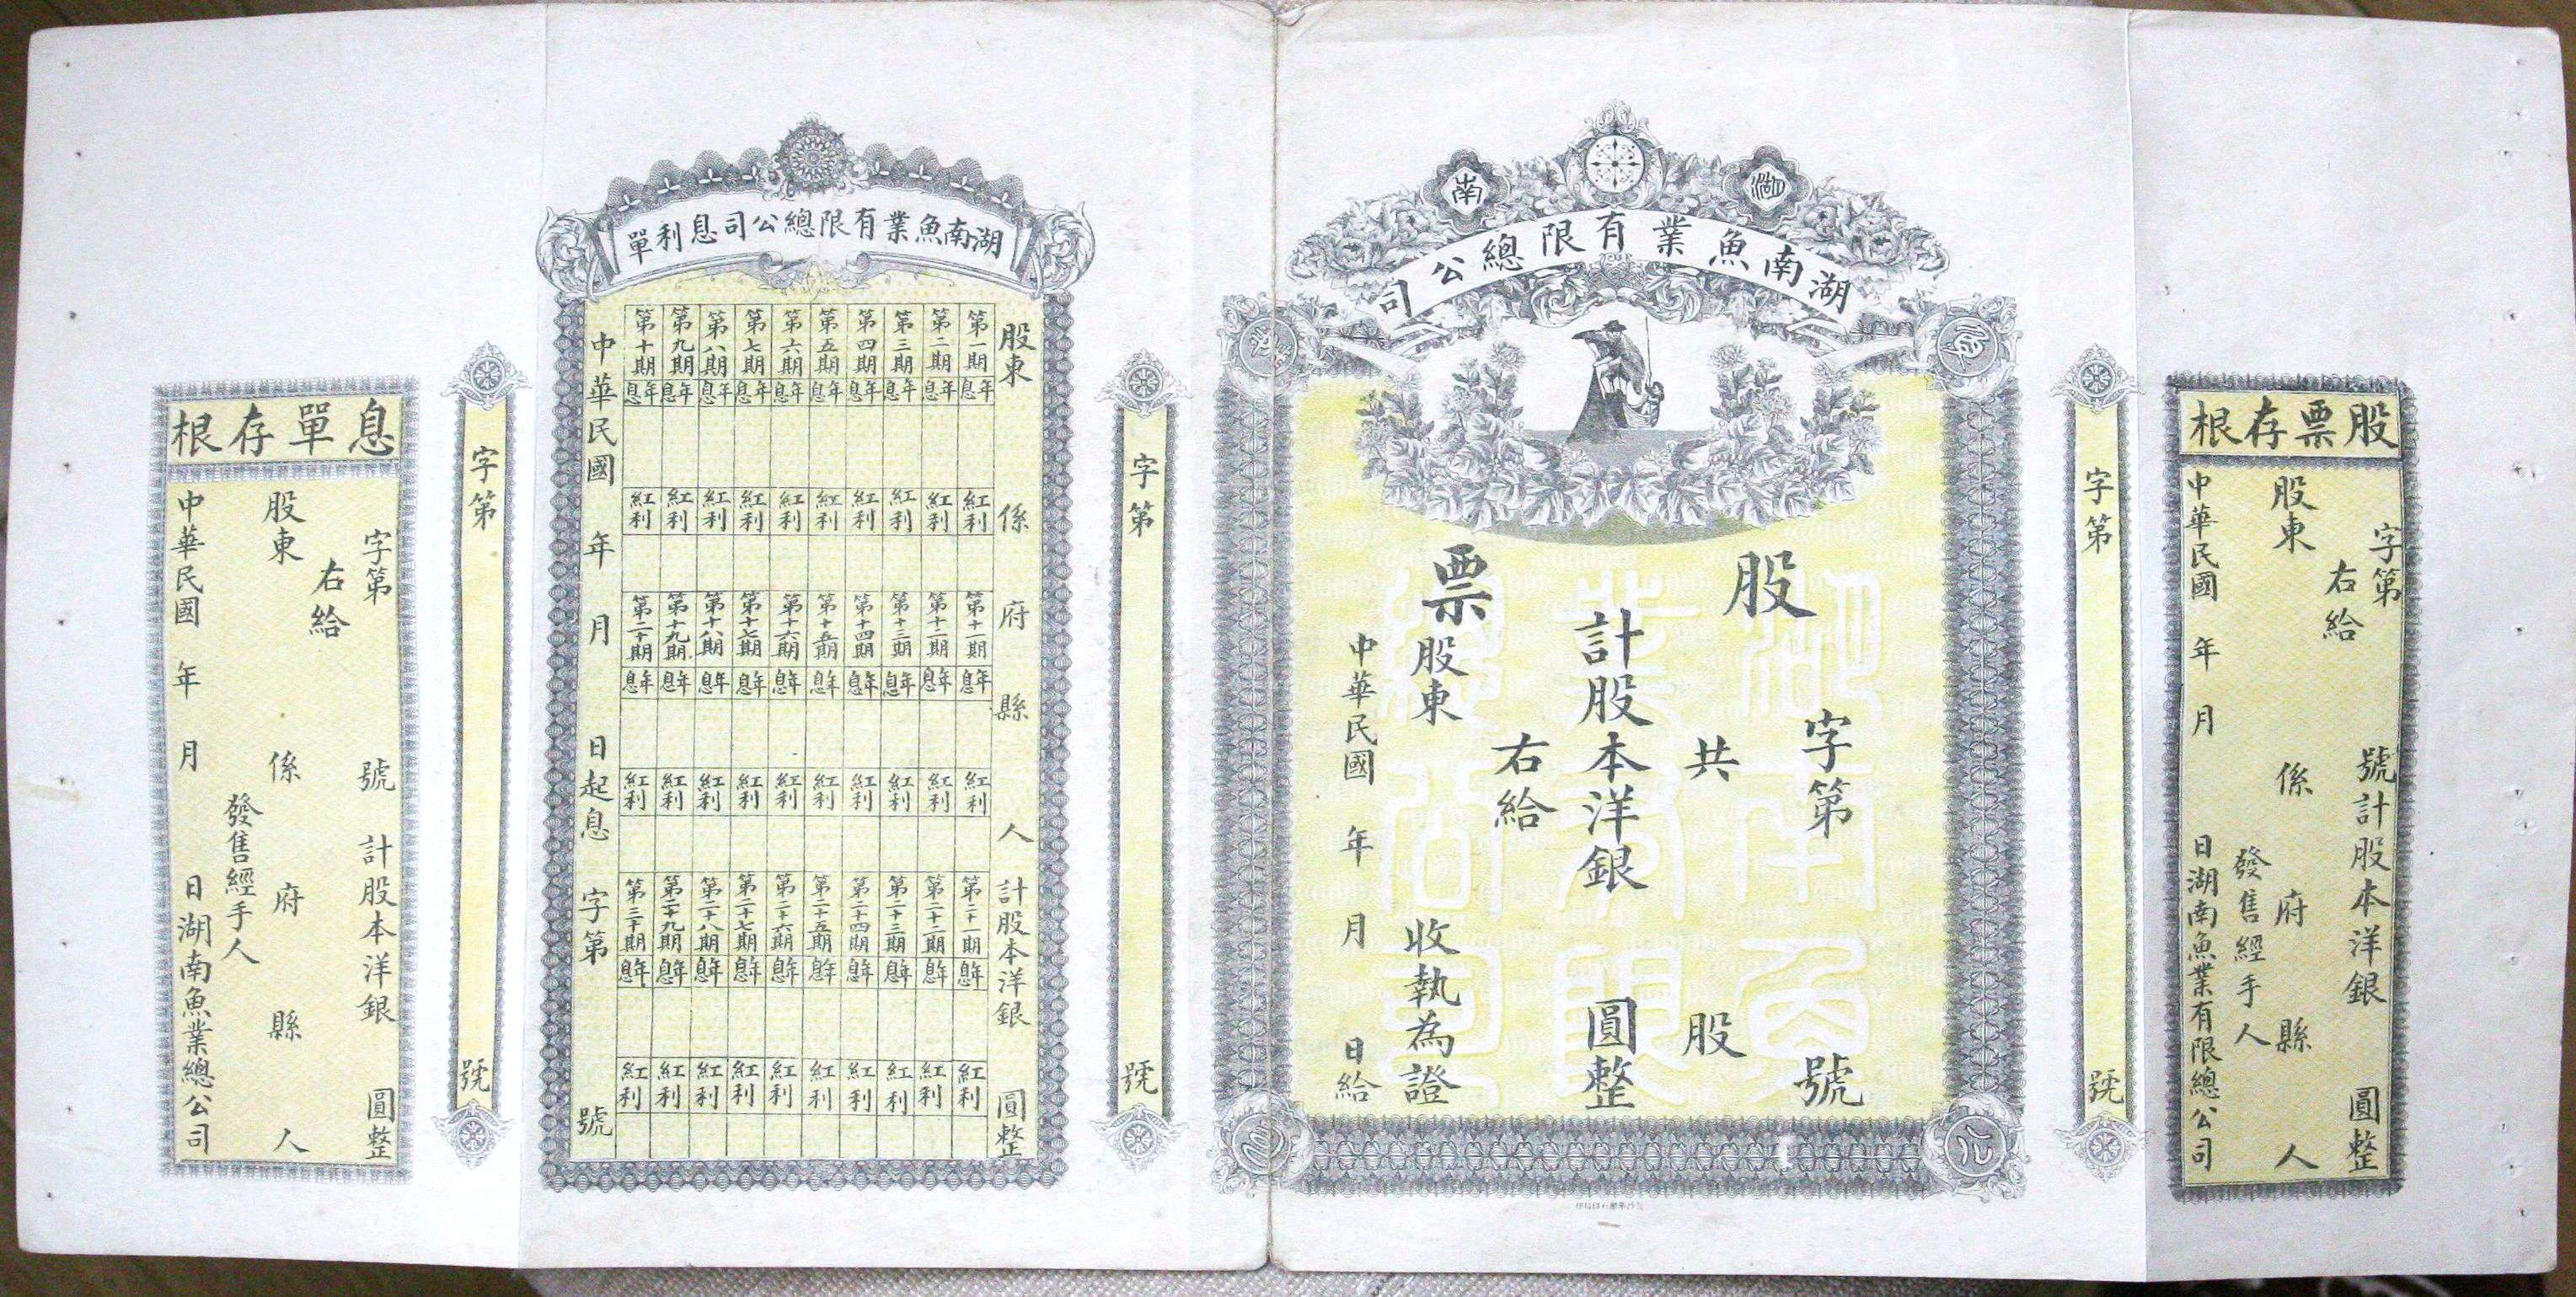 S0170, Hunan Province Fishery Co., Ltd, Stock Certificate of China 1920